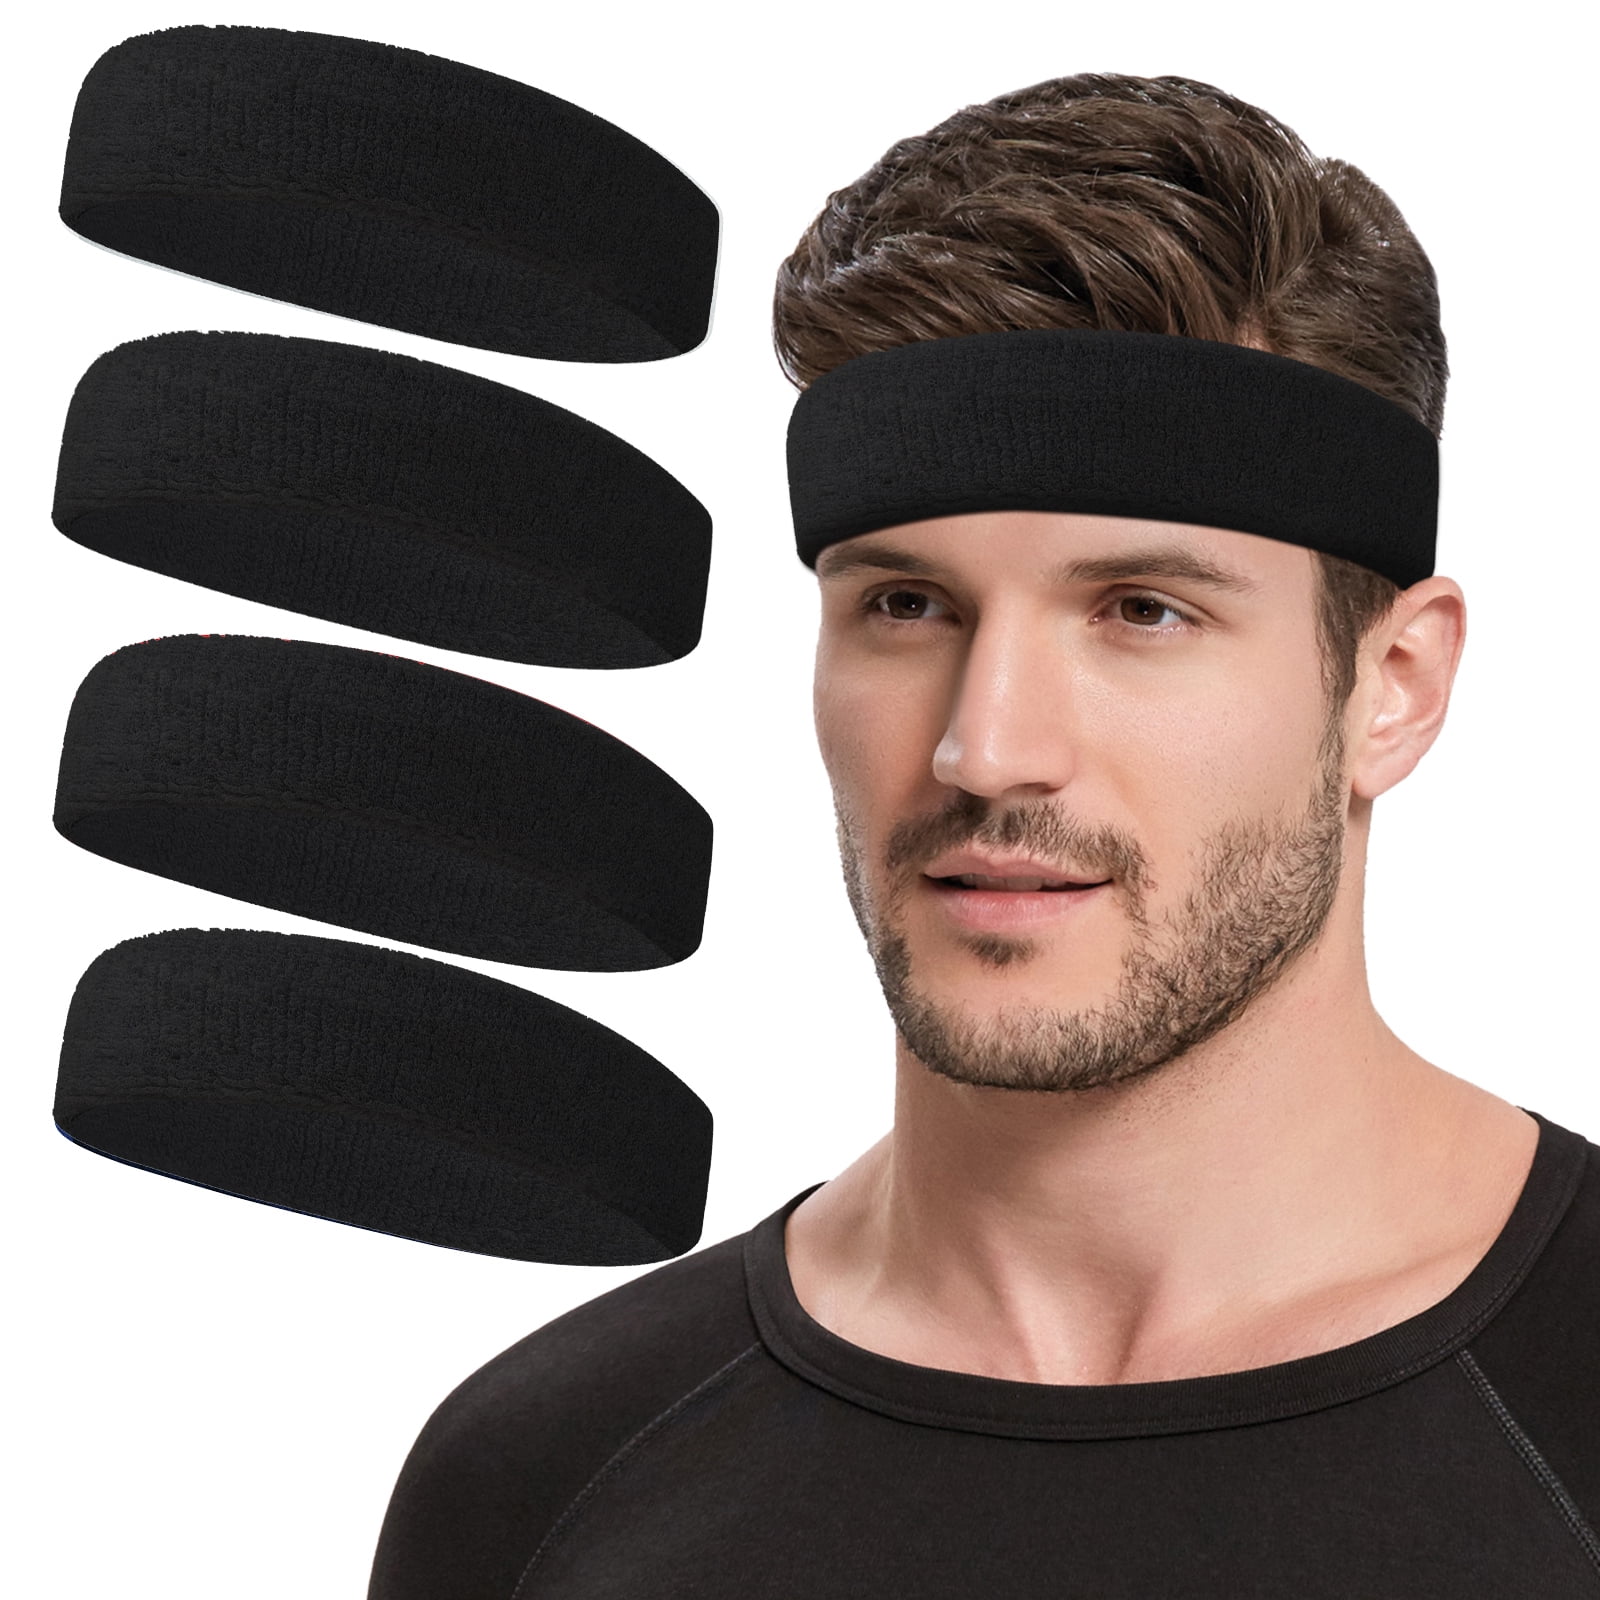 NONSTOP Sweat Bands Headbands for Men Women, Cooling Headband Pack of 4  Workout Sweatbands Moisture Wicking Absorbent Head Bands, Stretch No Slip  Men's Headbands for Yoga Running Sports Hiking 